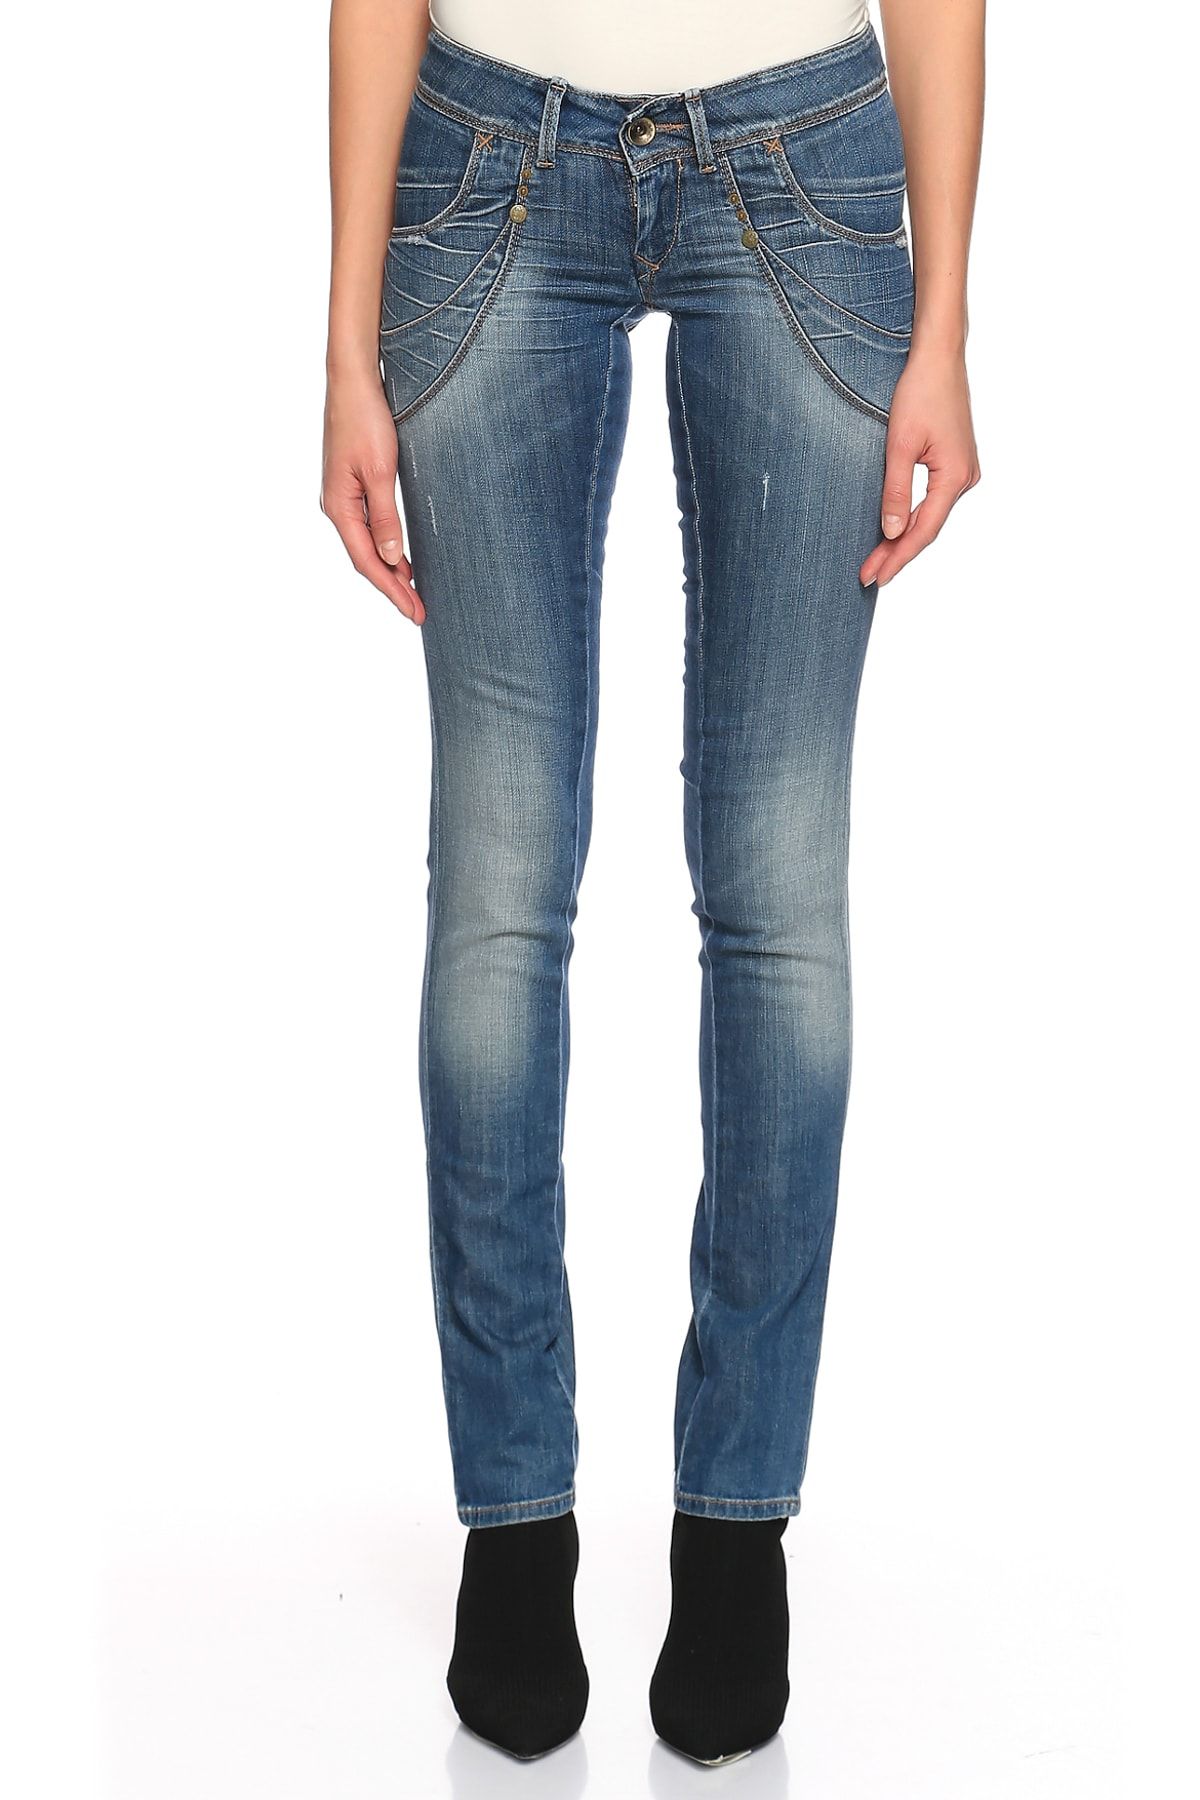 Fornarina Kadın Çok Renkli Jeans Fobır1B77D305-8K